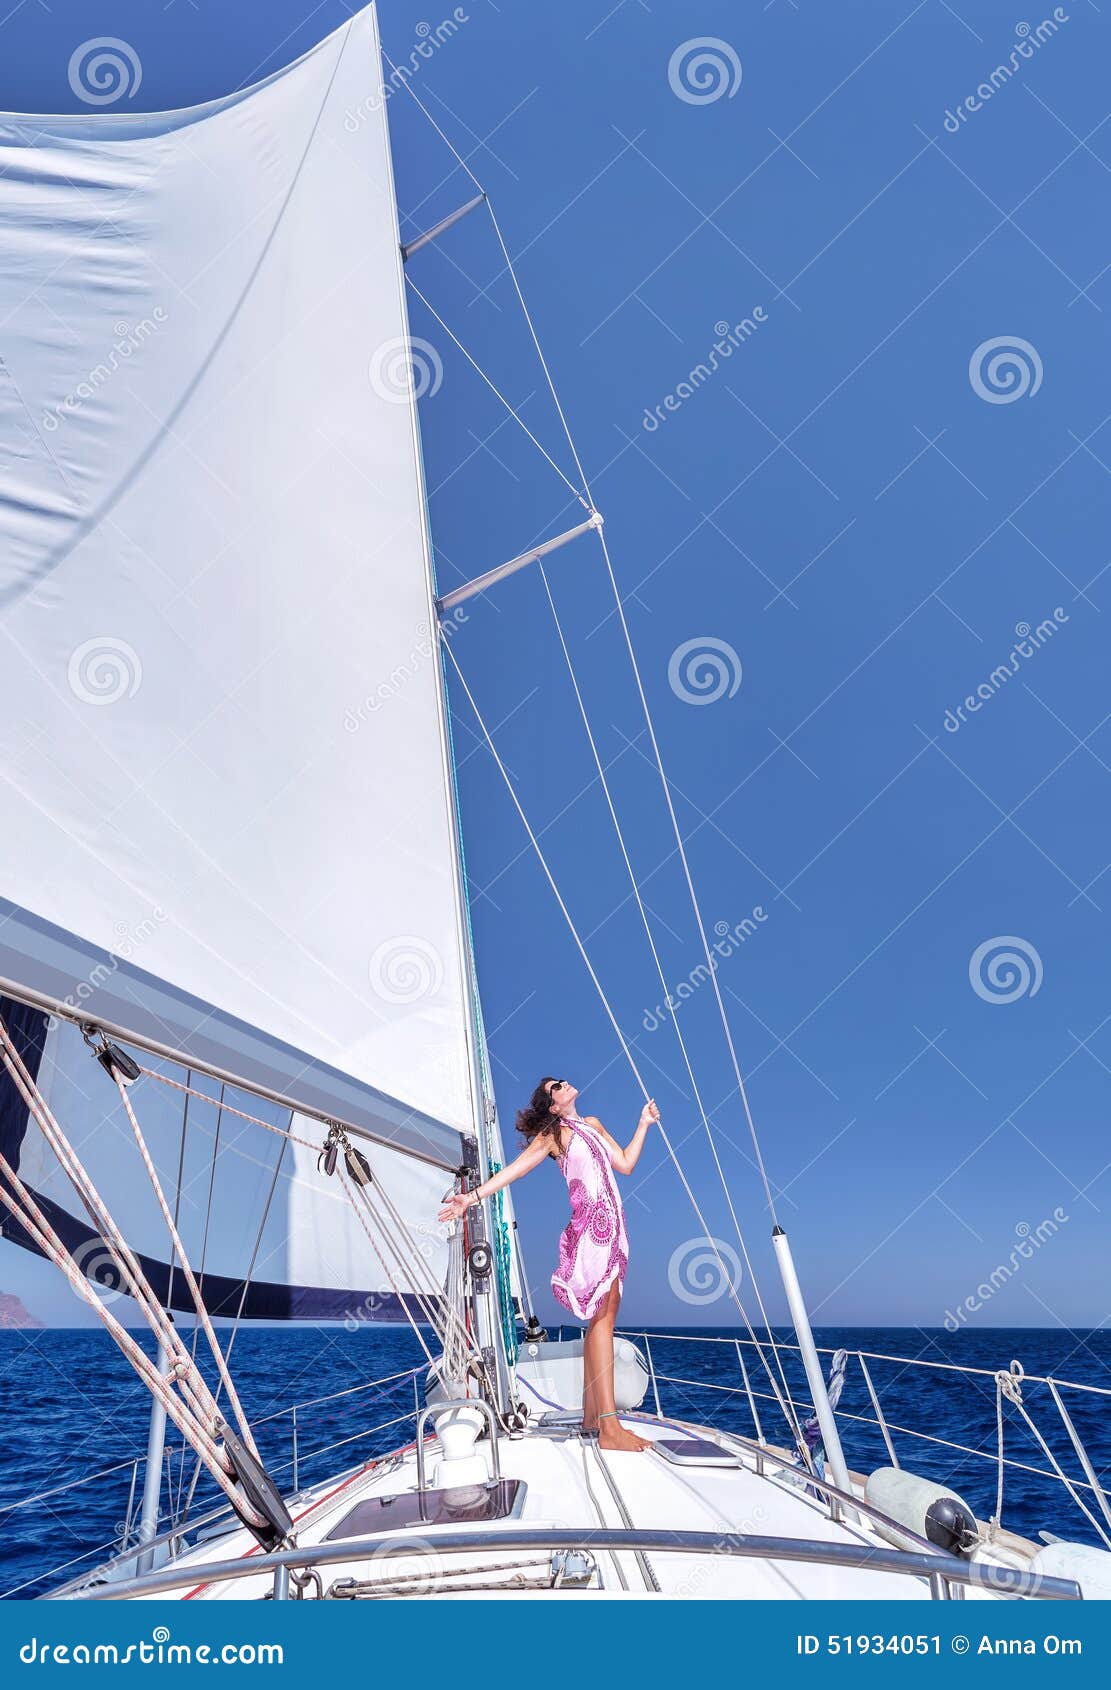 Happy Woman On Sailboat Stock Image Image Of Holidays 51934051 